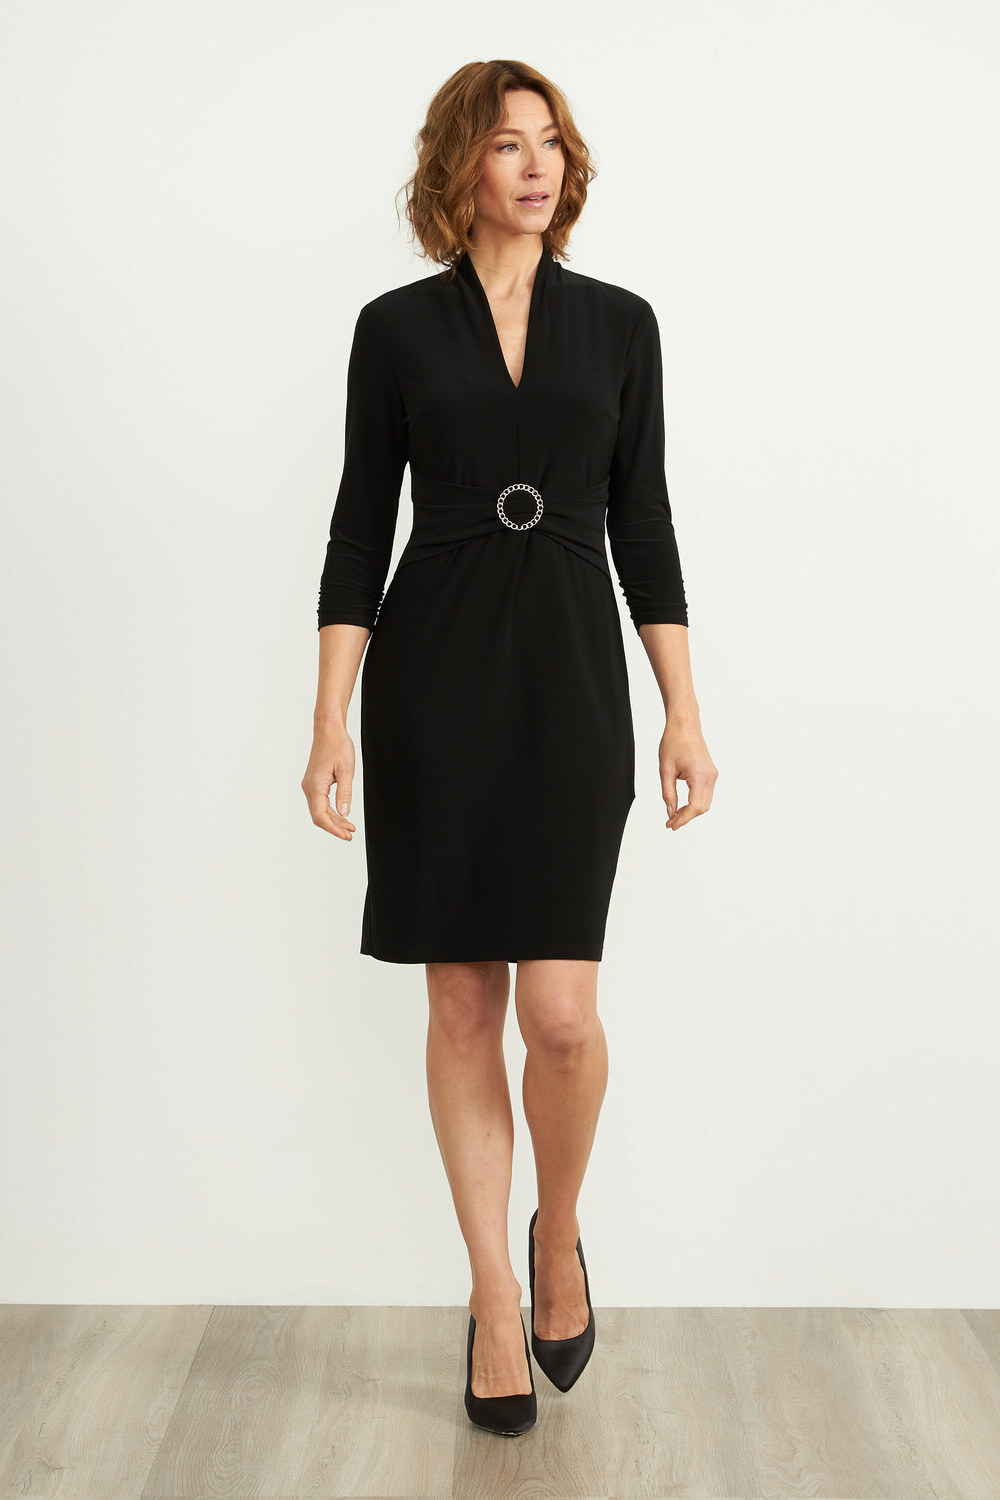 Joseph Ribkoff V-Neck Waist Detail Dress Style 203503. Black